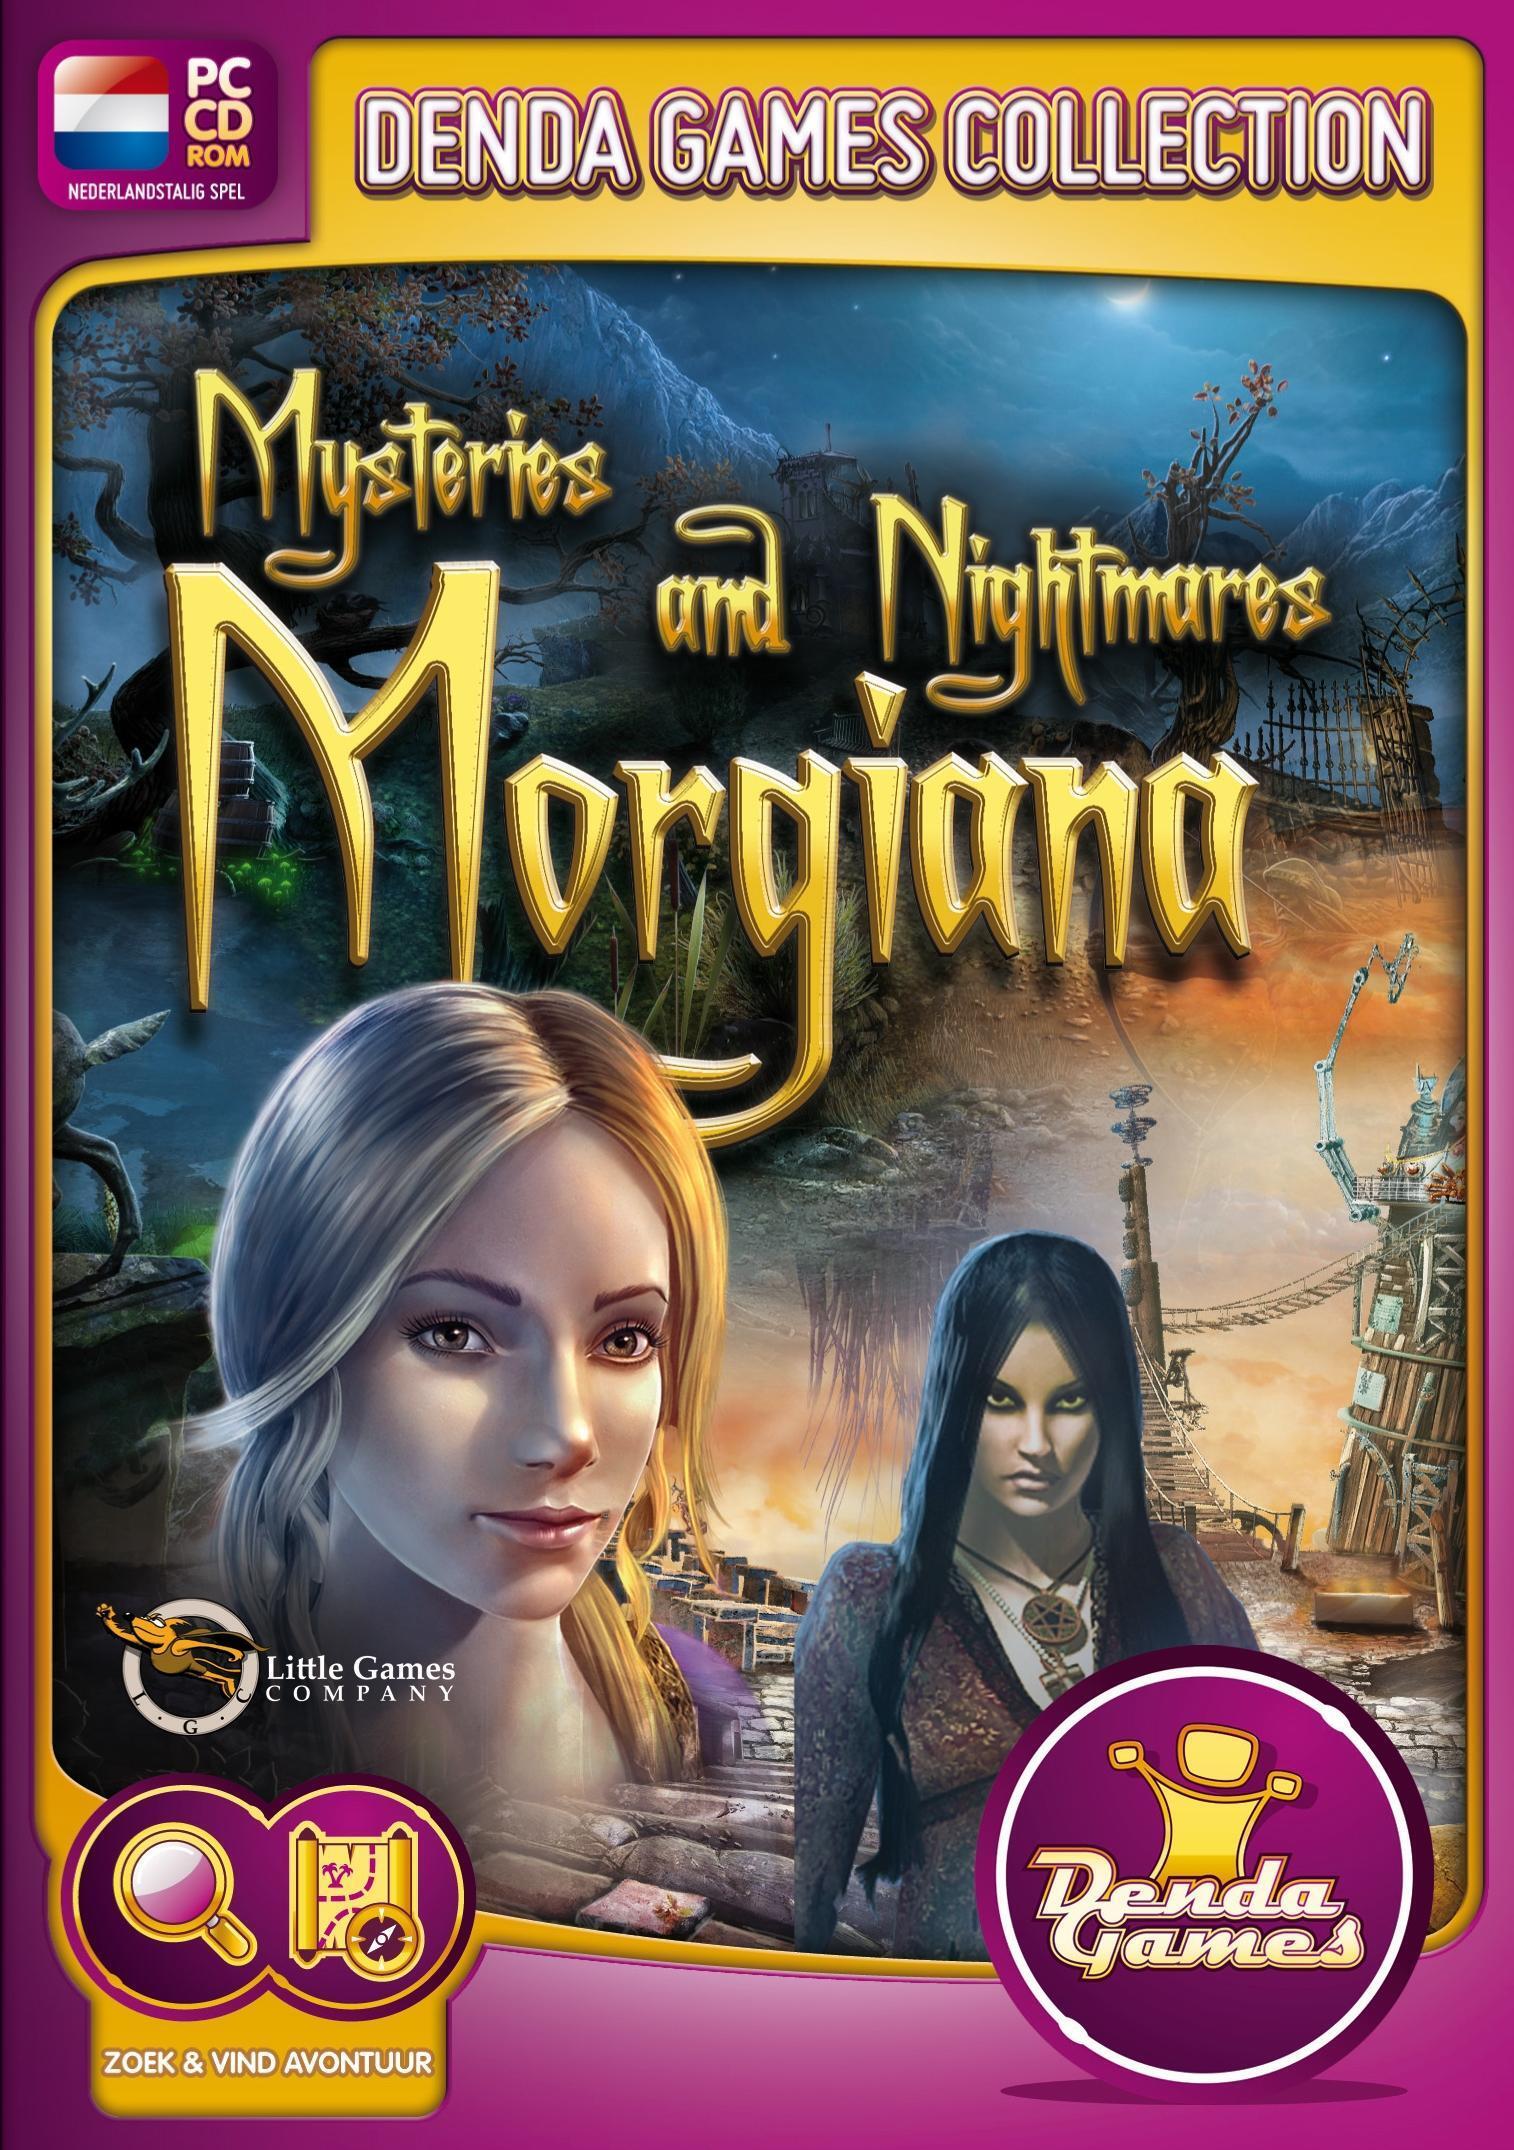 Denda Mysteries and Nightmares, Morgiana